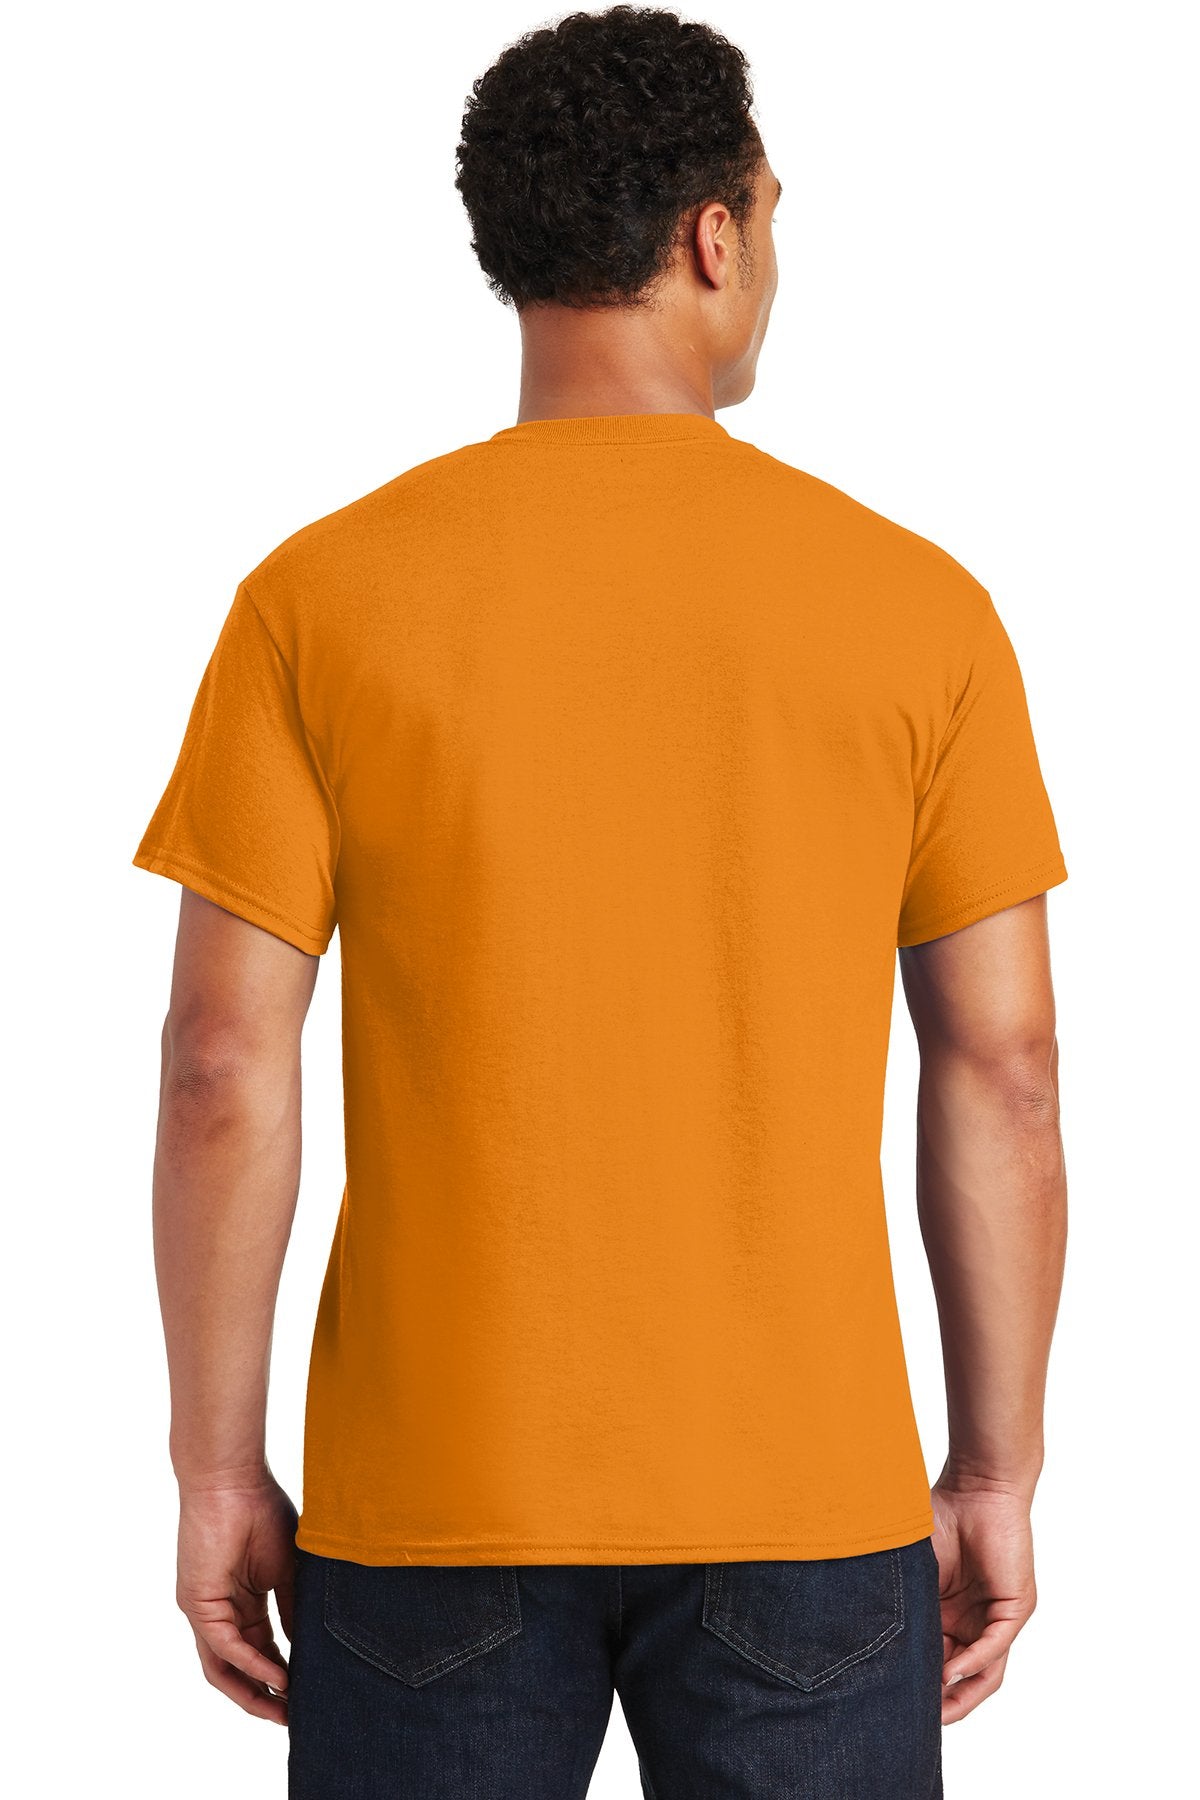 gildan dryblend cotton poly t shirt 8000 tennessee orange